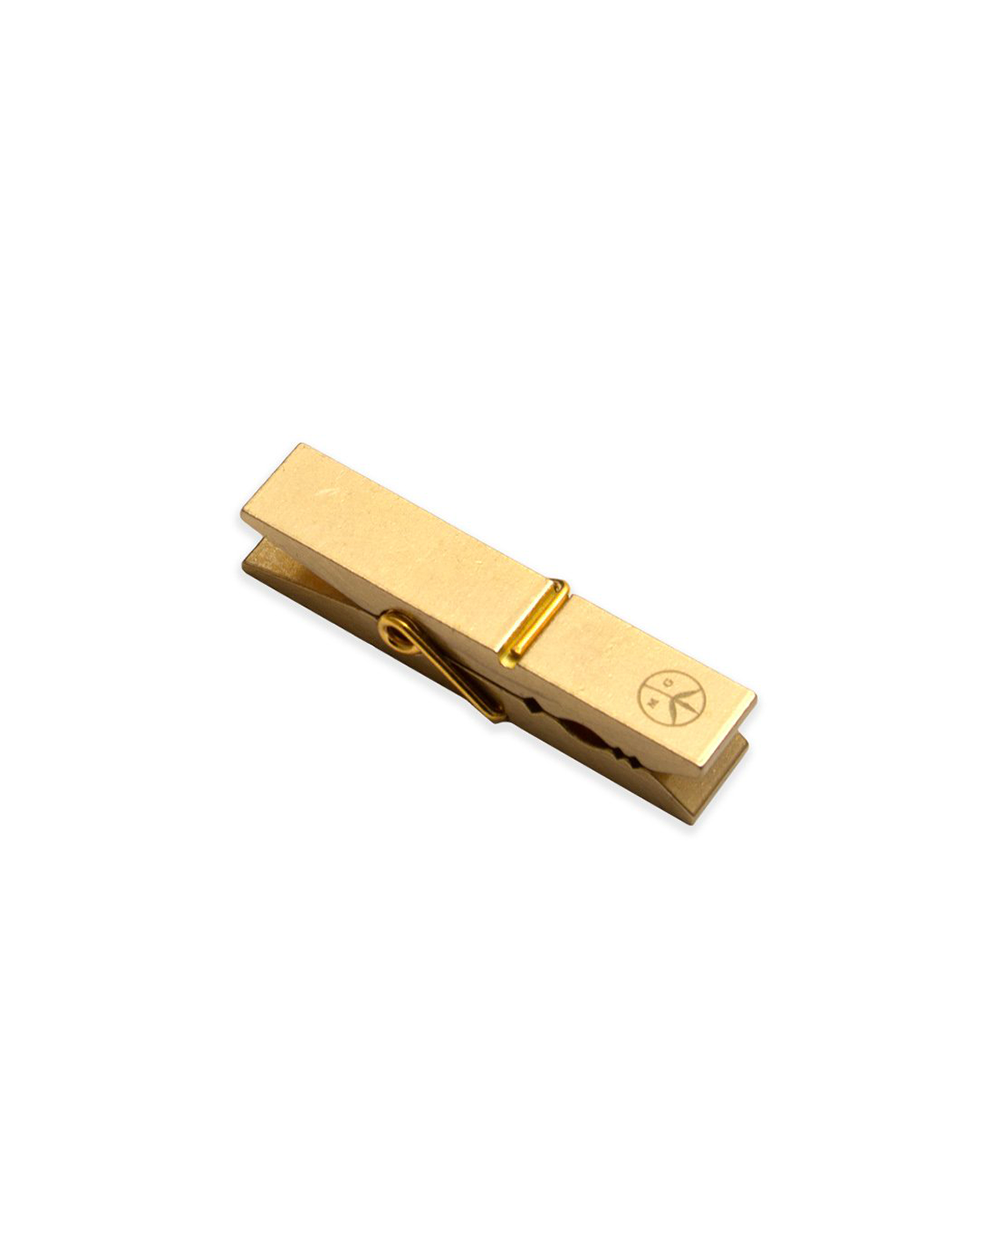 Brass Clothespin (Roach Clip) - Gold